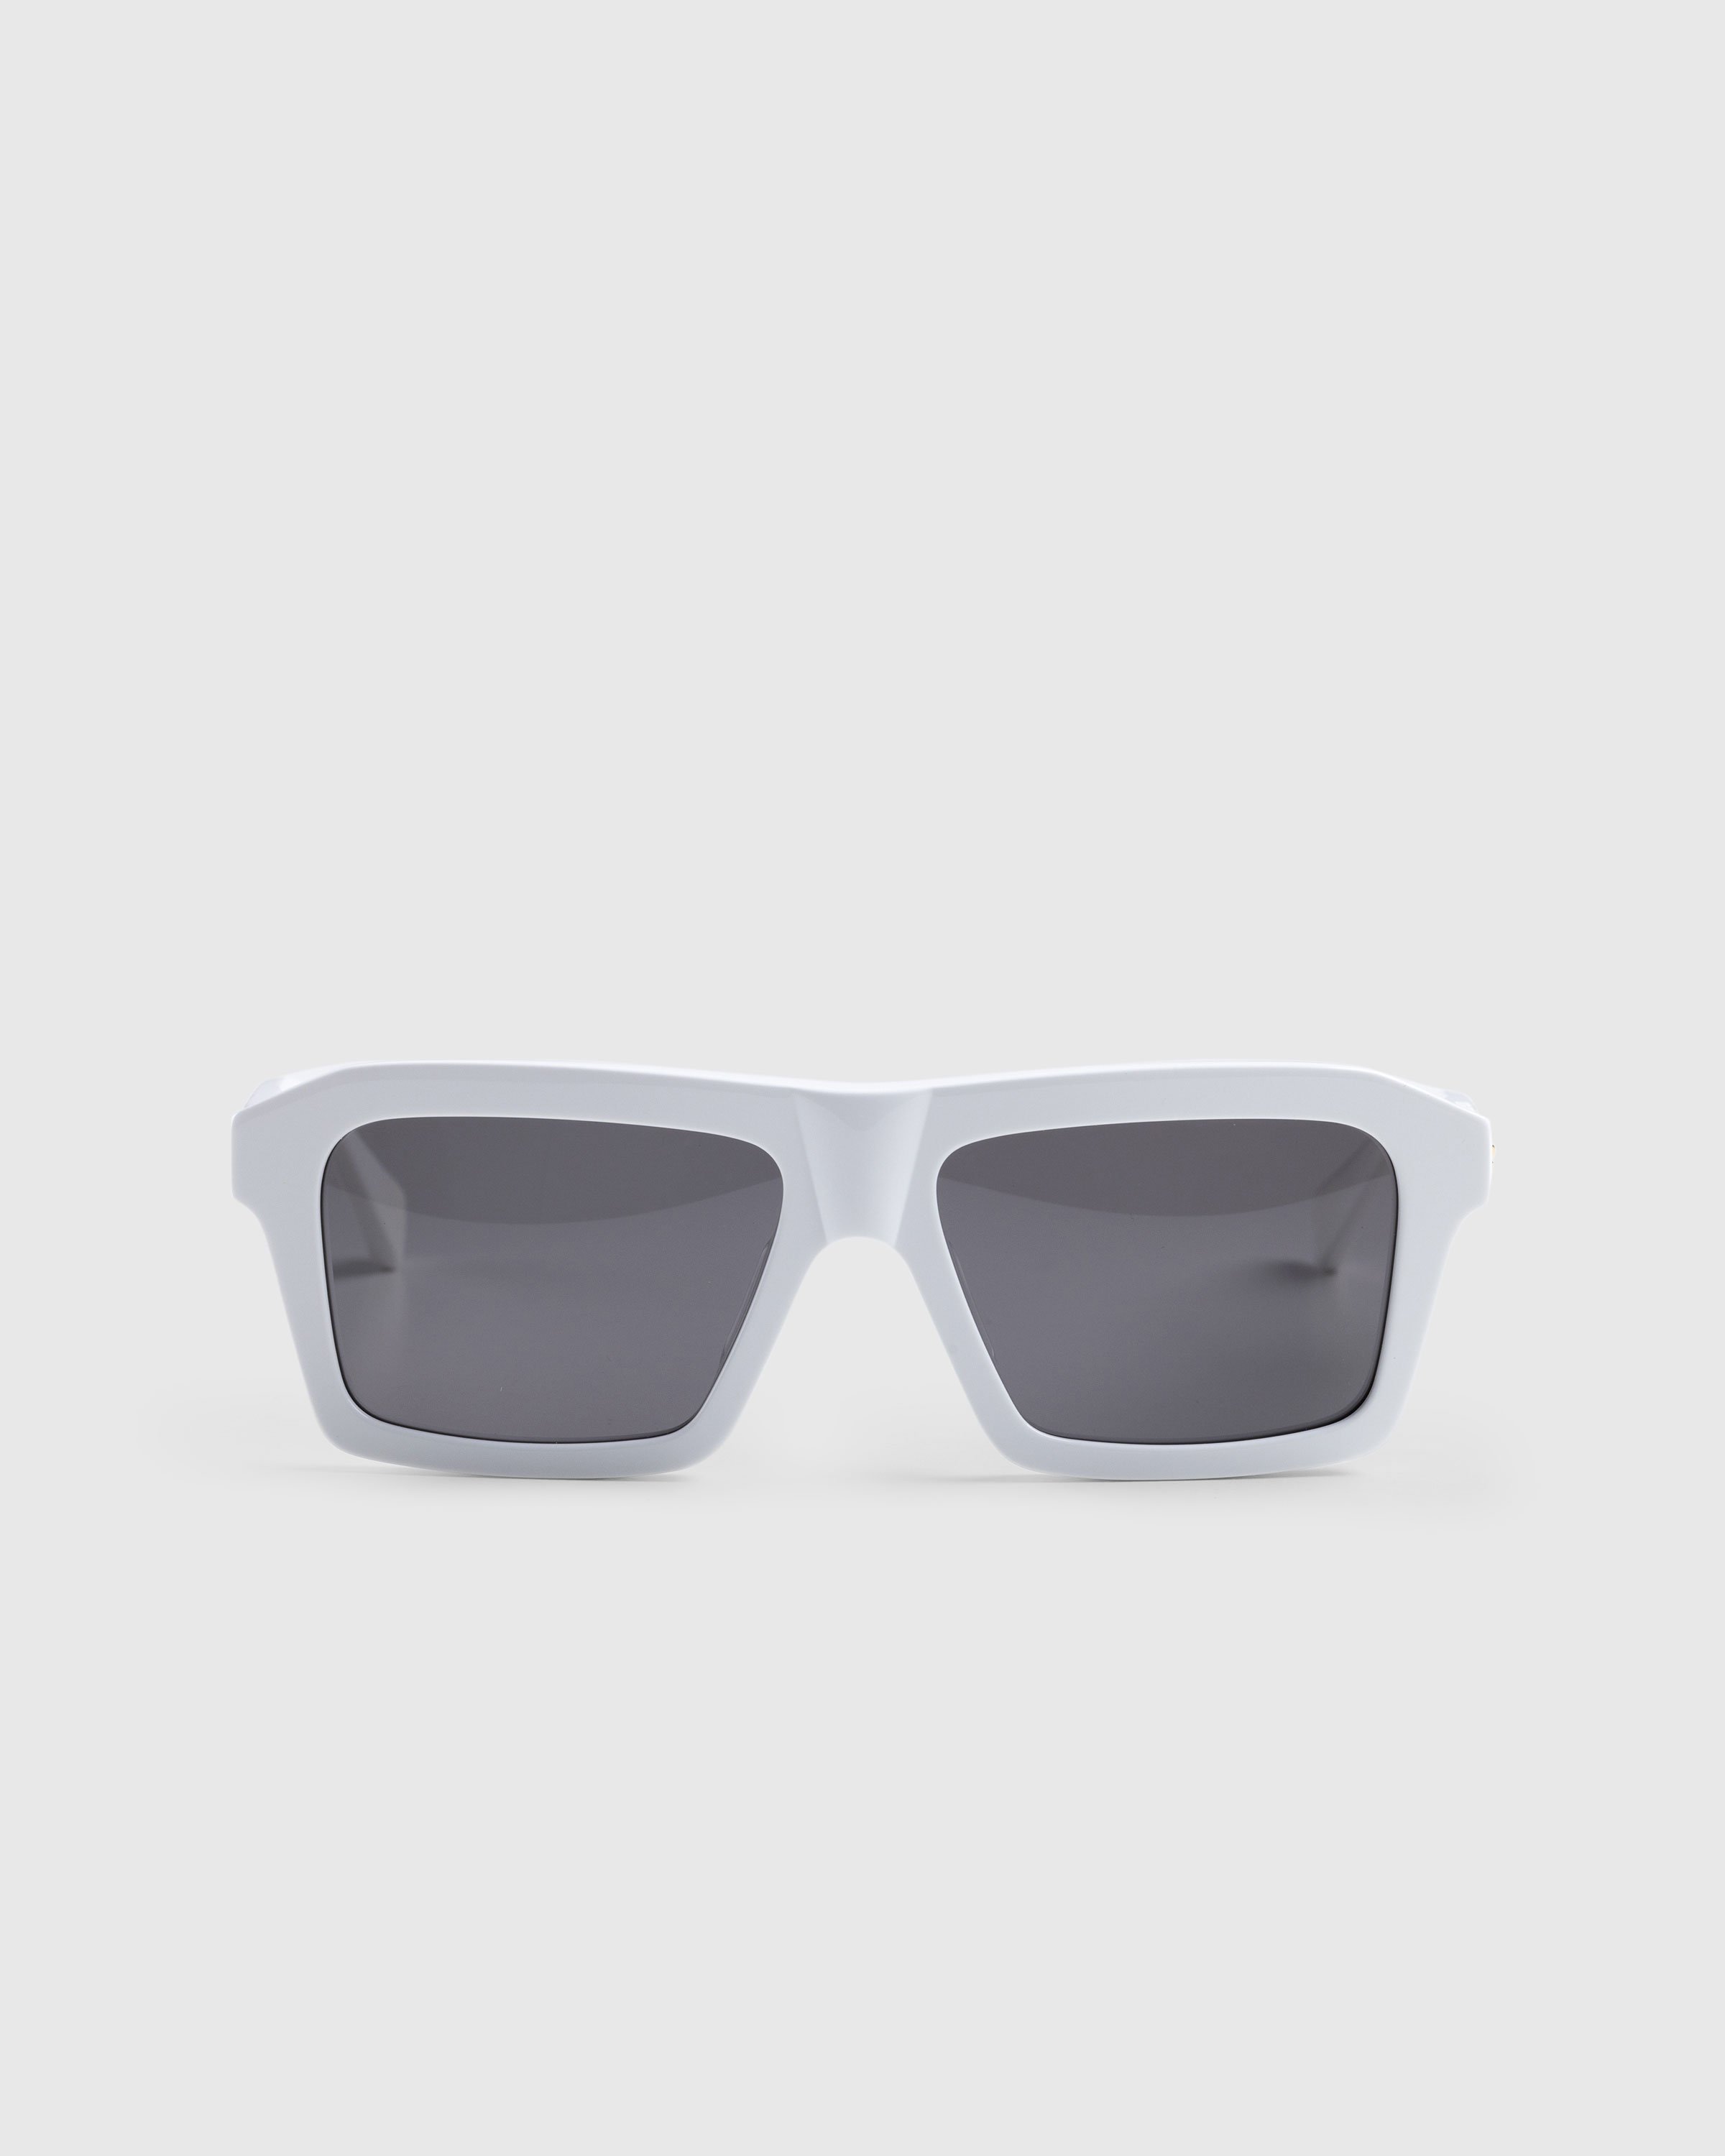 Bottega Veneta - Classic Square Sunglasses White/White/Grey - Accessories - Multi - Image 1